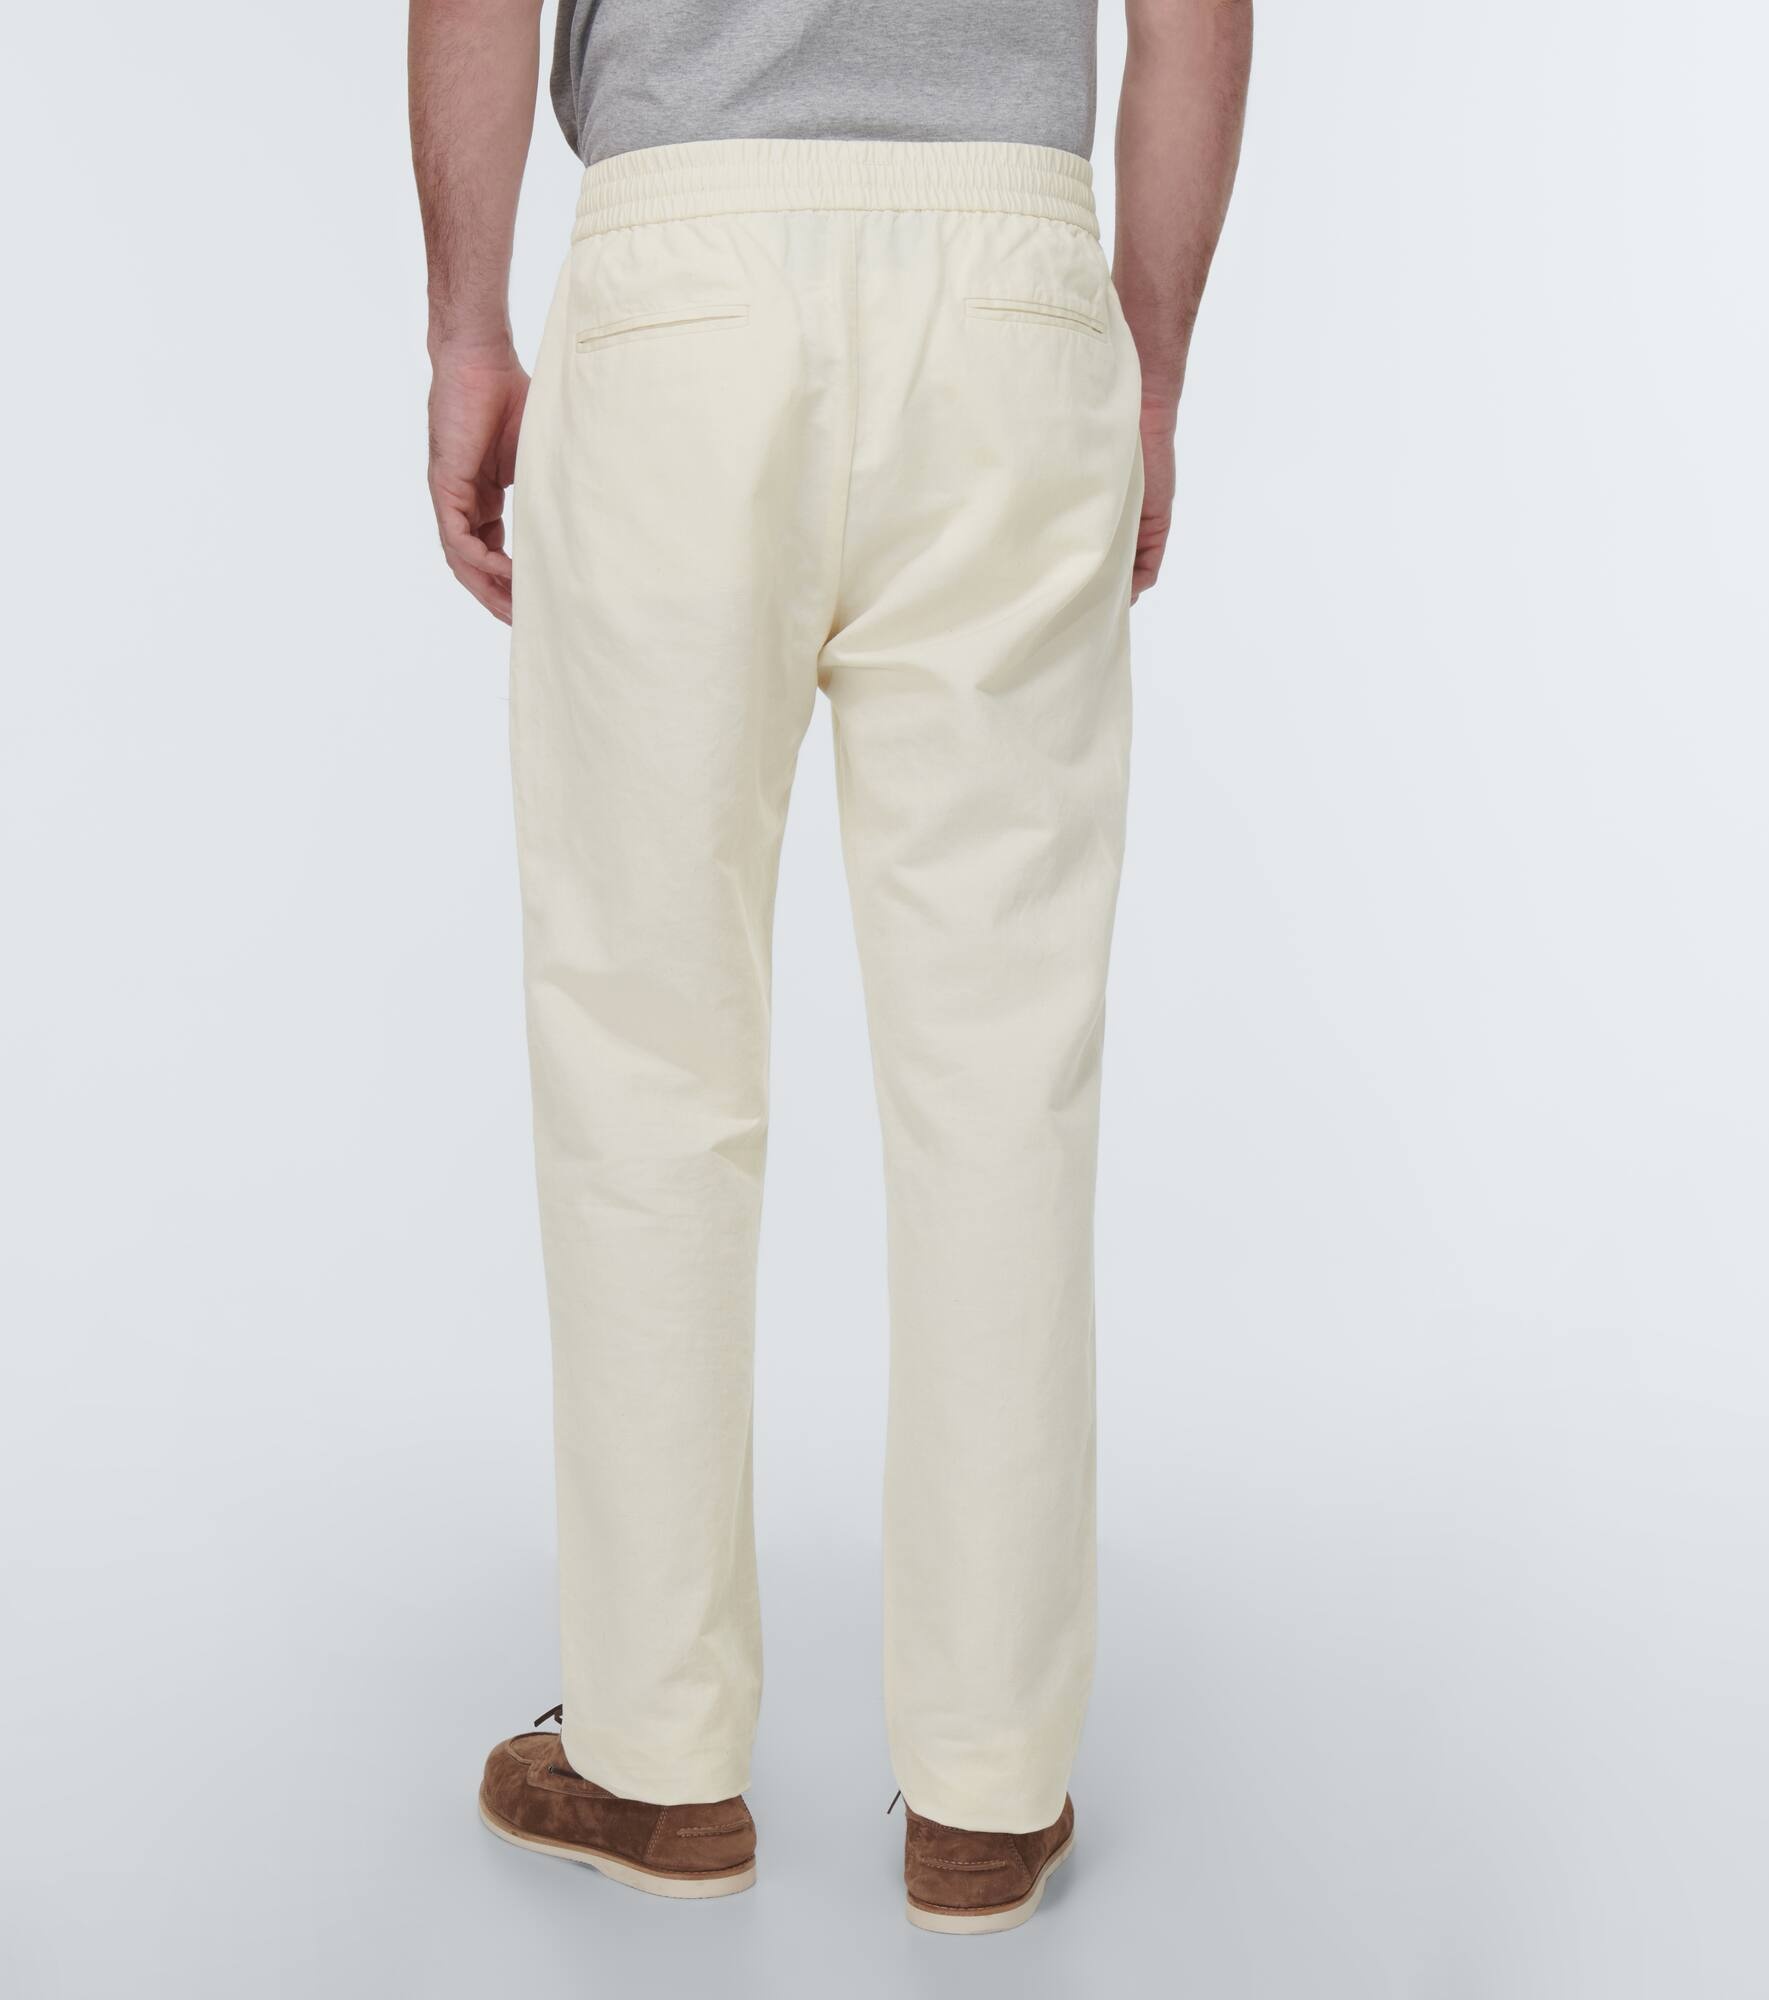 Cotton and linen pants - 4